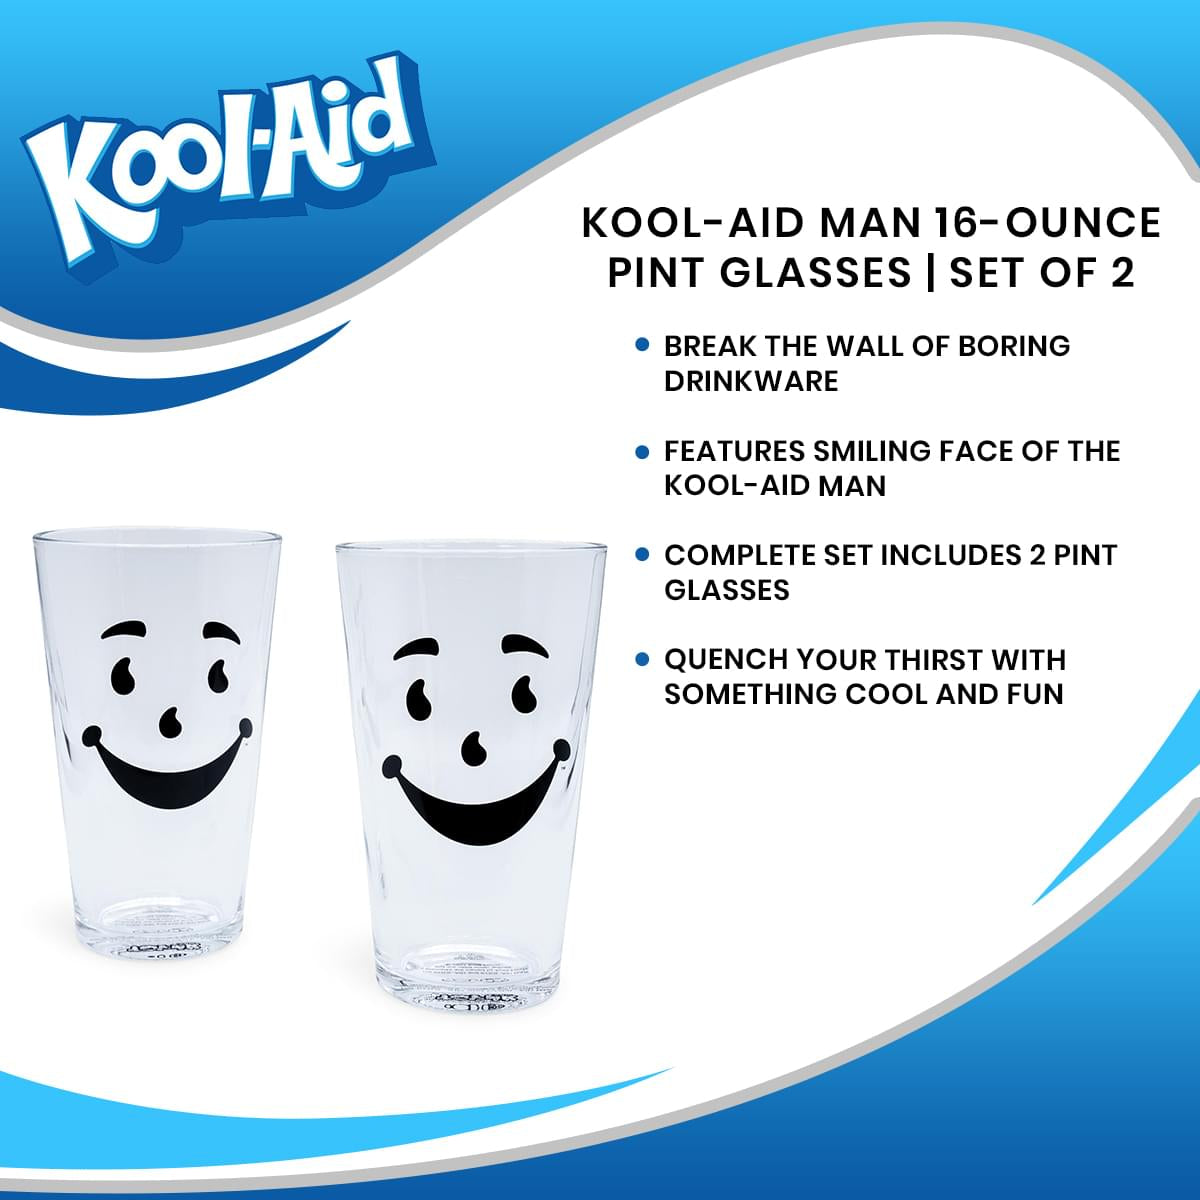 Kool-Aid Man 16-Ounce Pint Glasses | Set of 2